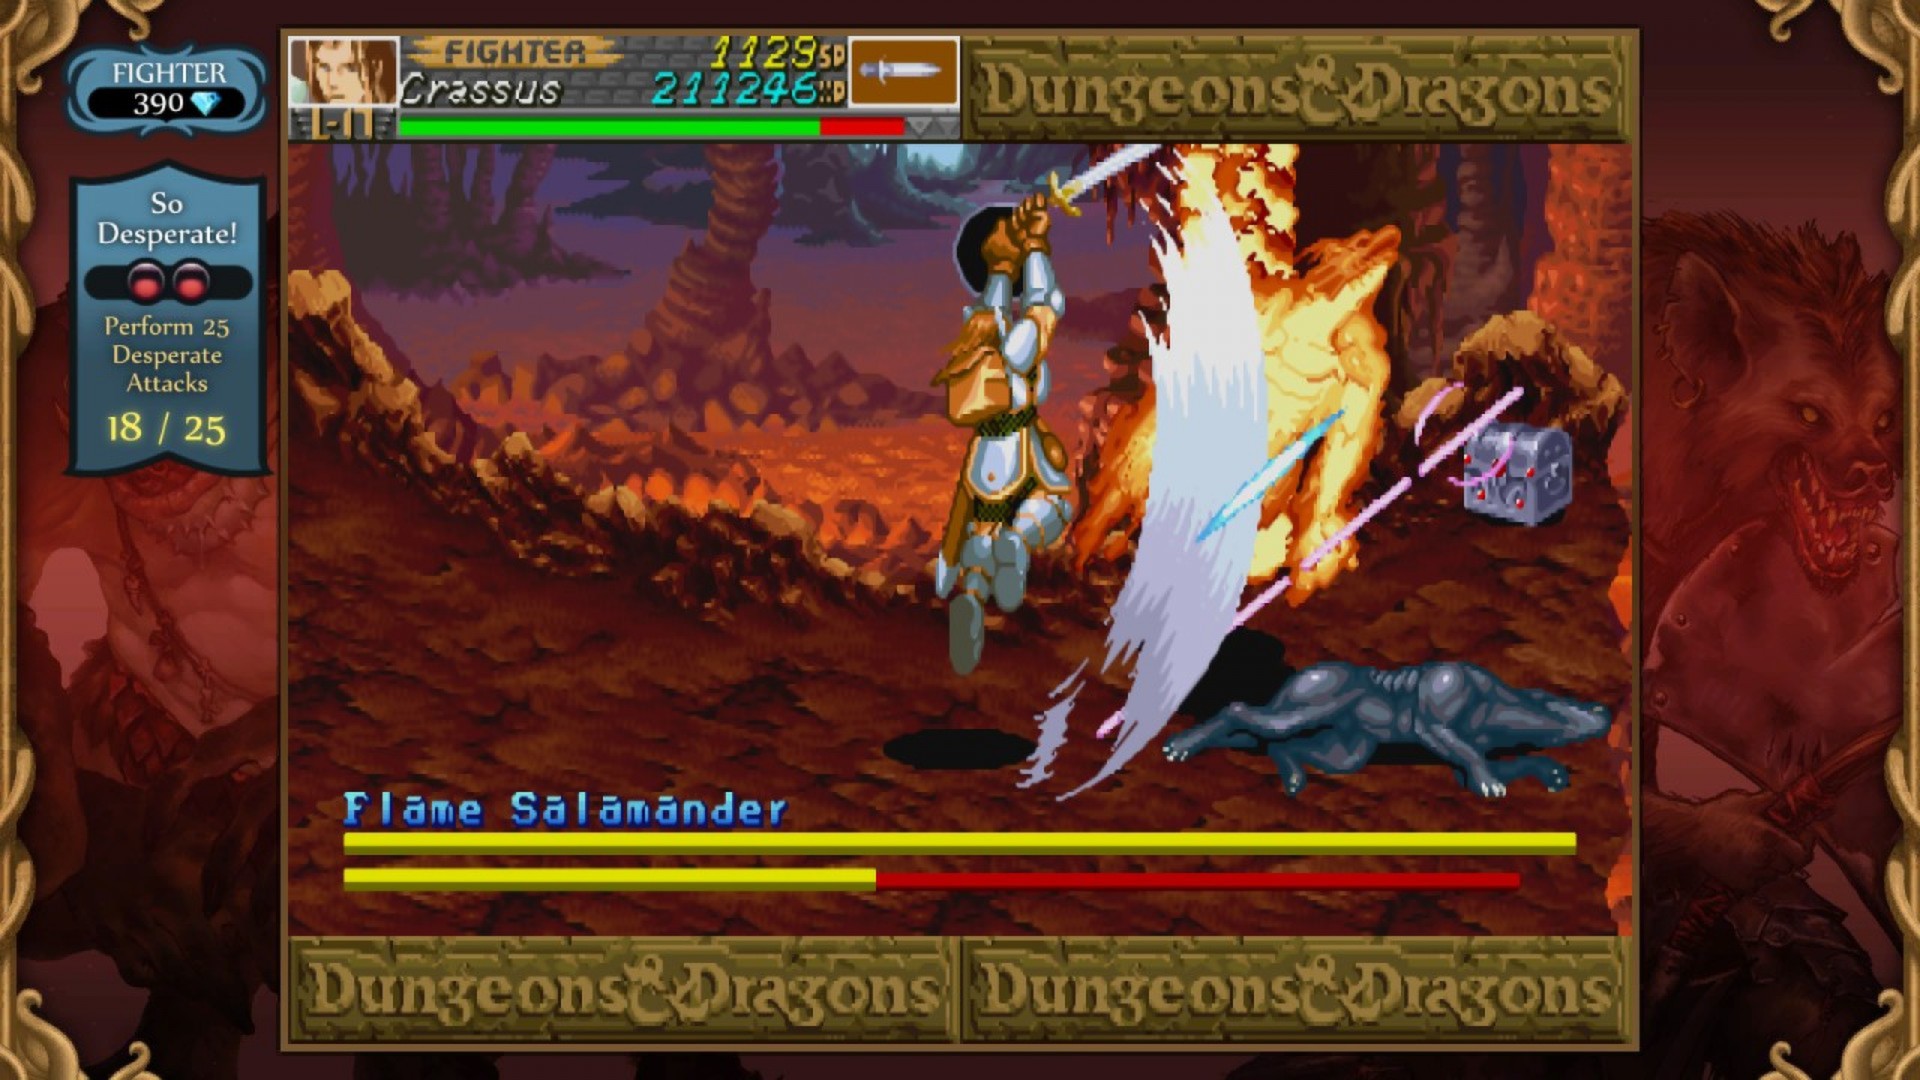 Dungeons & Dragons Online® on Steam